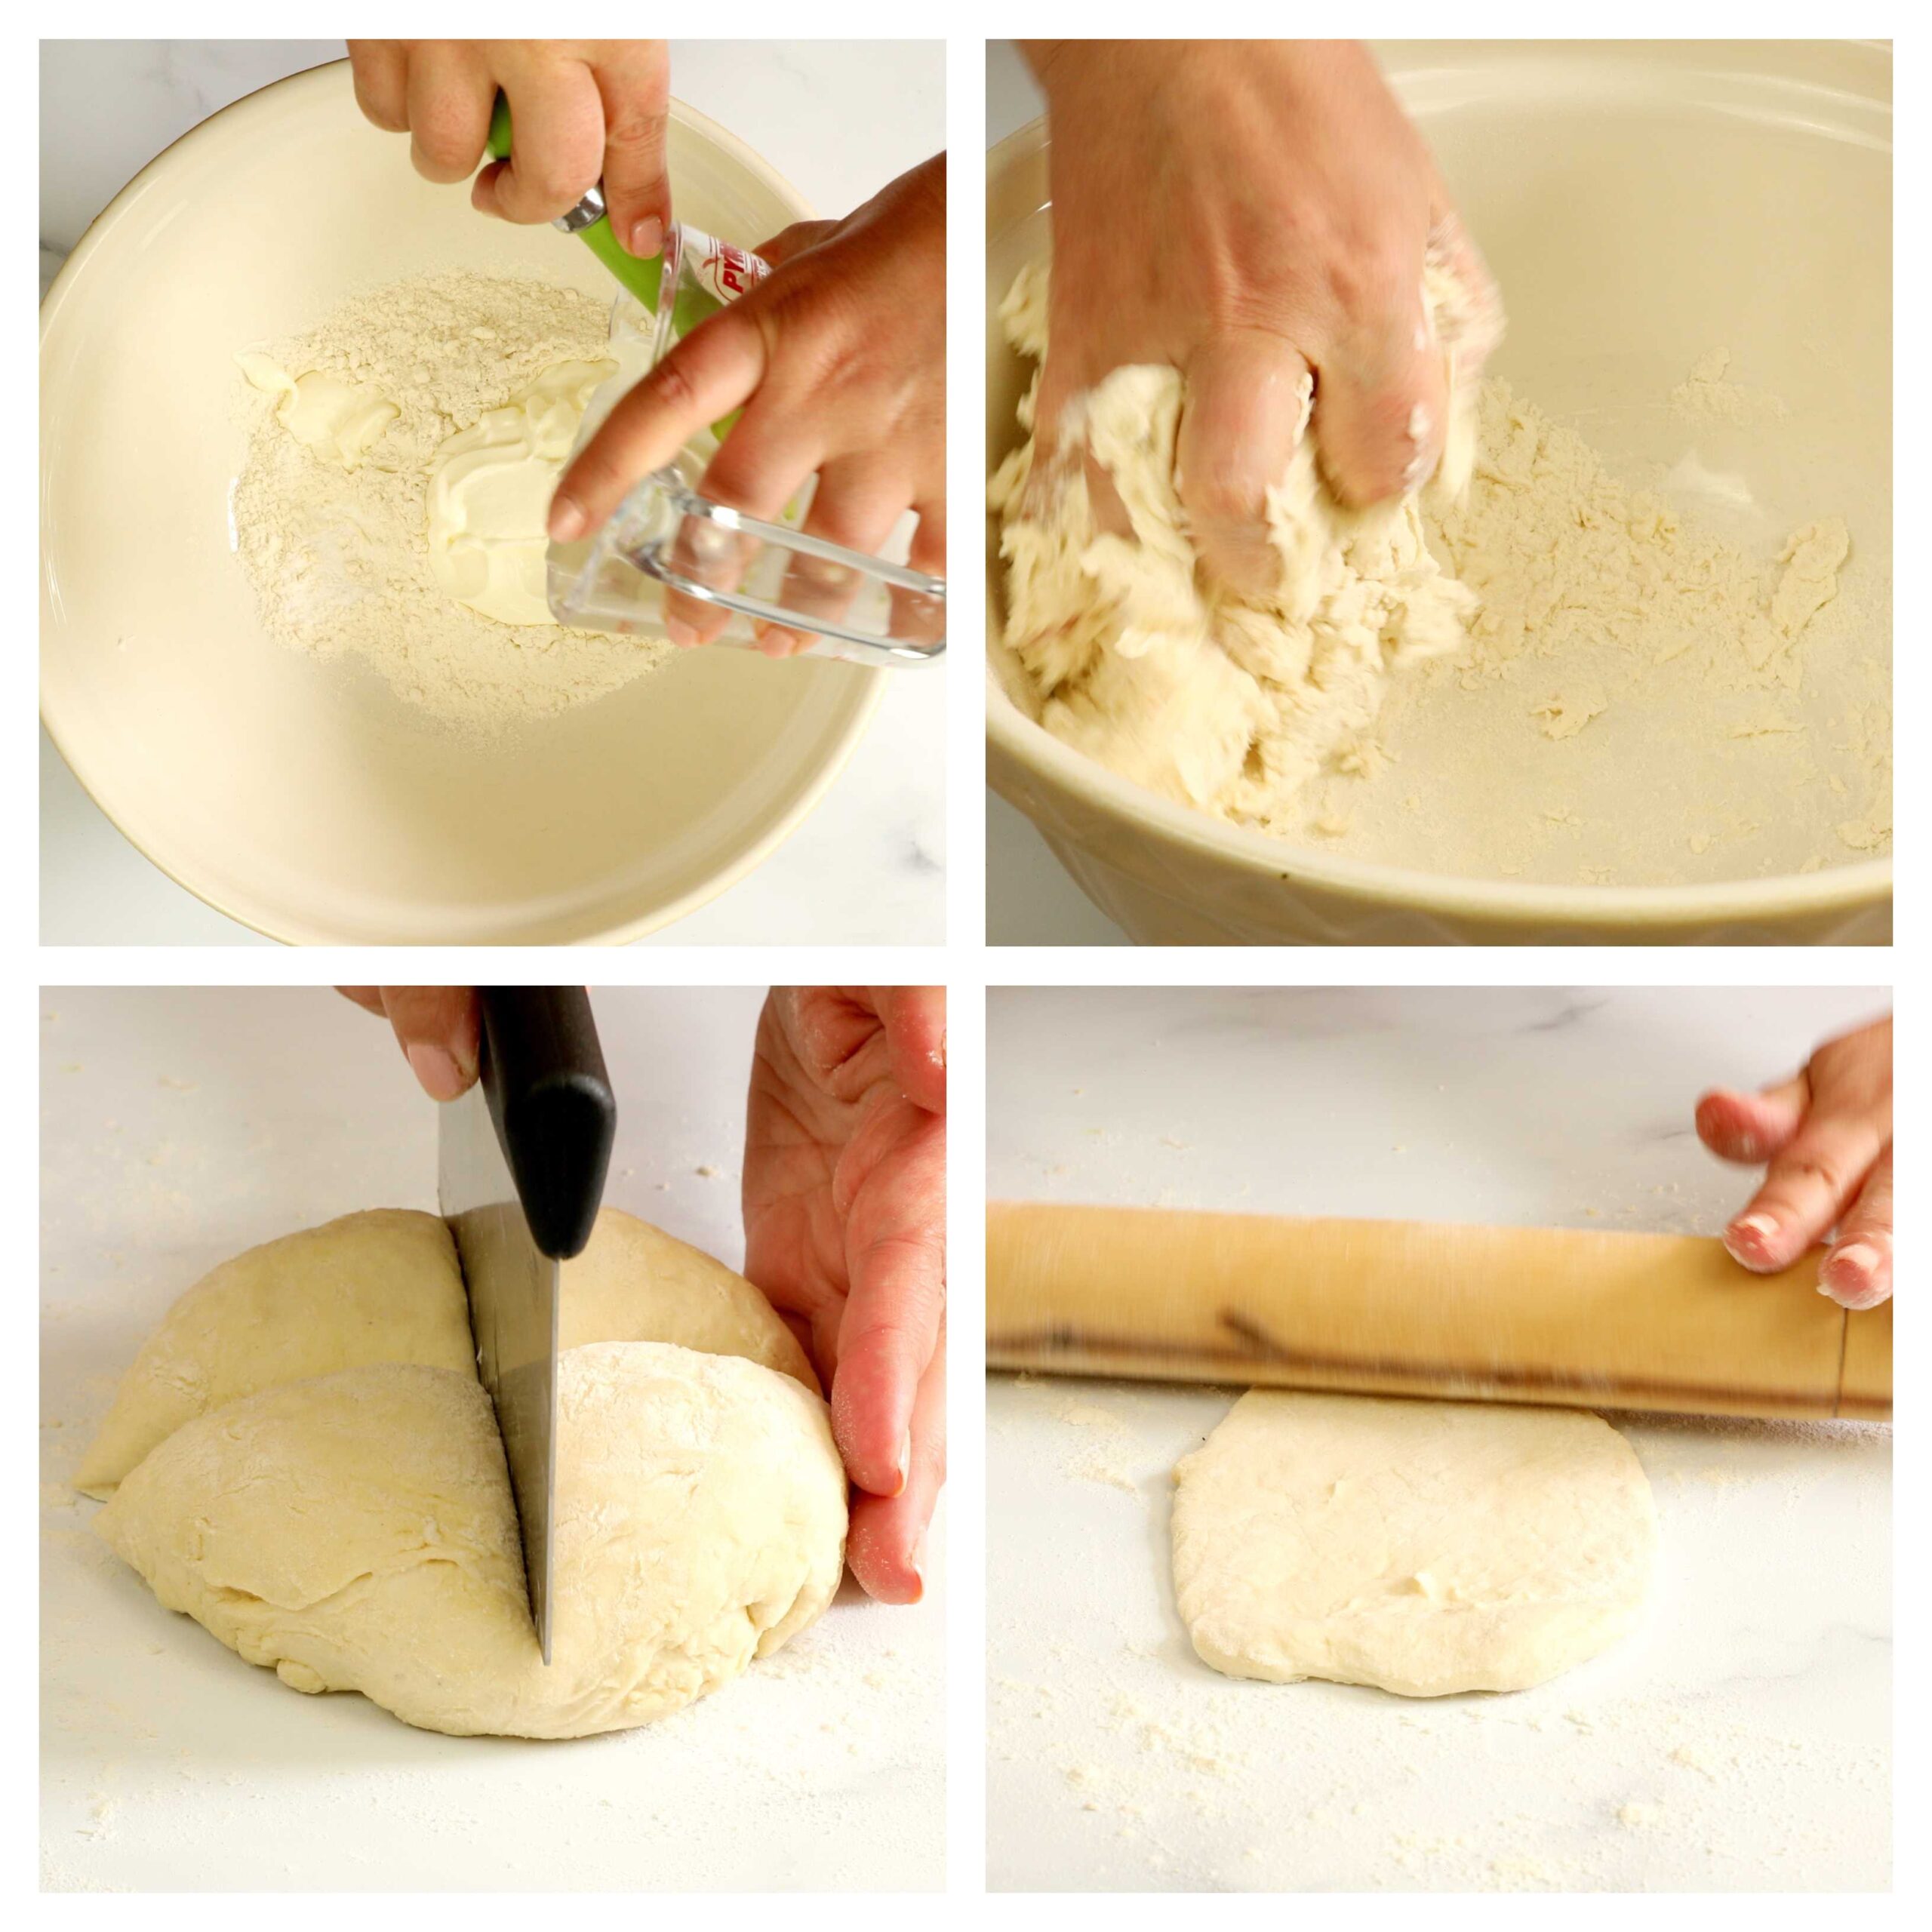 flatbread process images